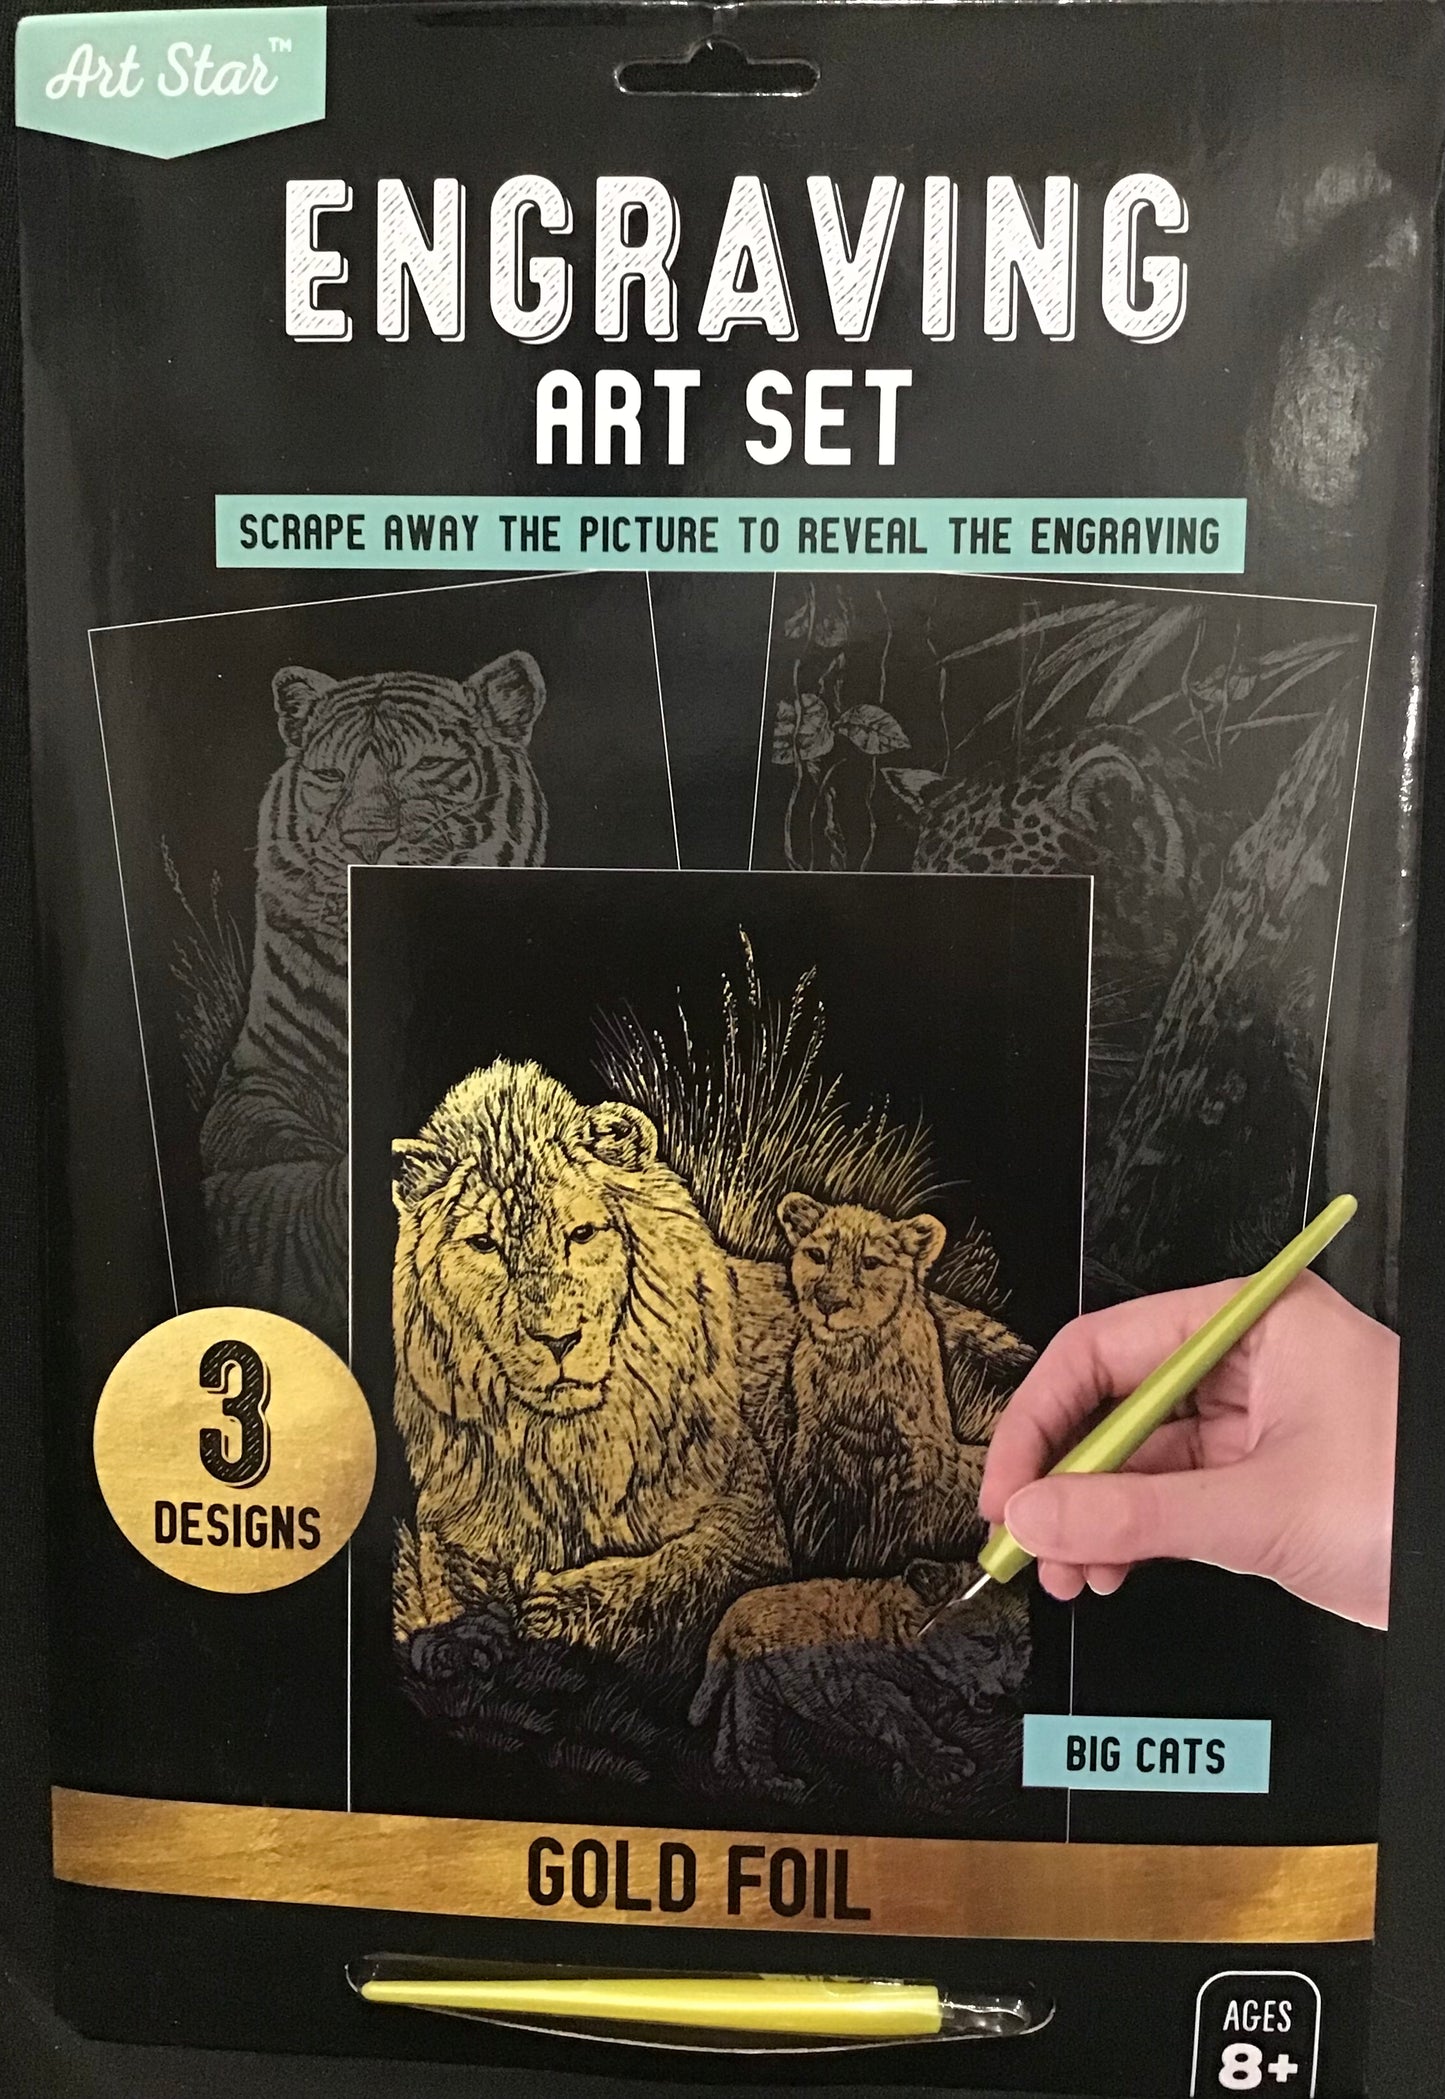 Art Star Engraving Art Set - 3 Designs - Big Cats - Gold Foil - Pen included